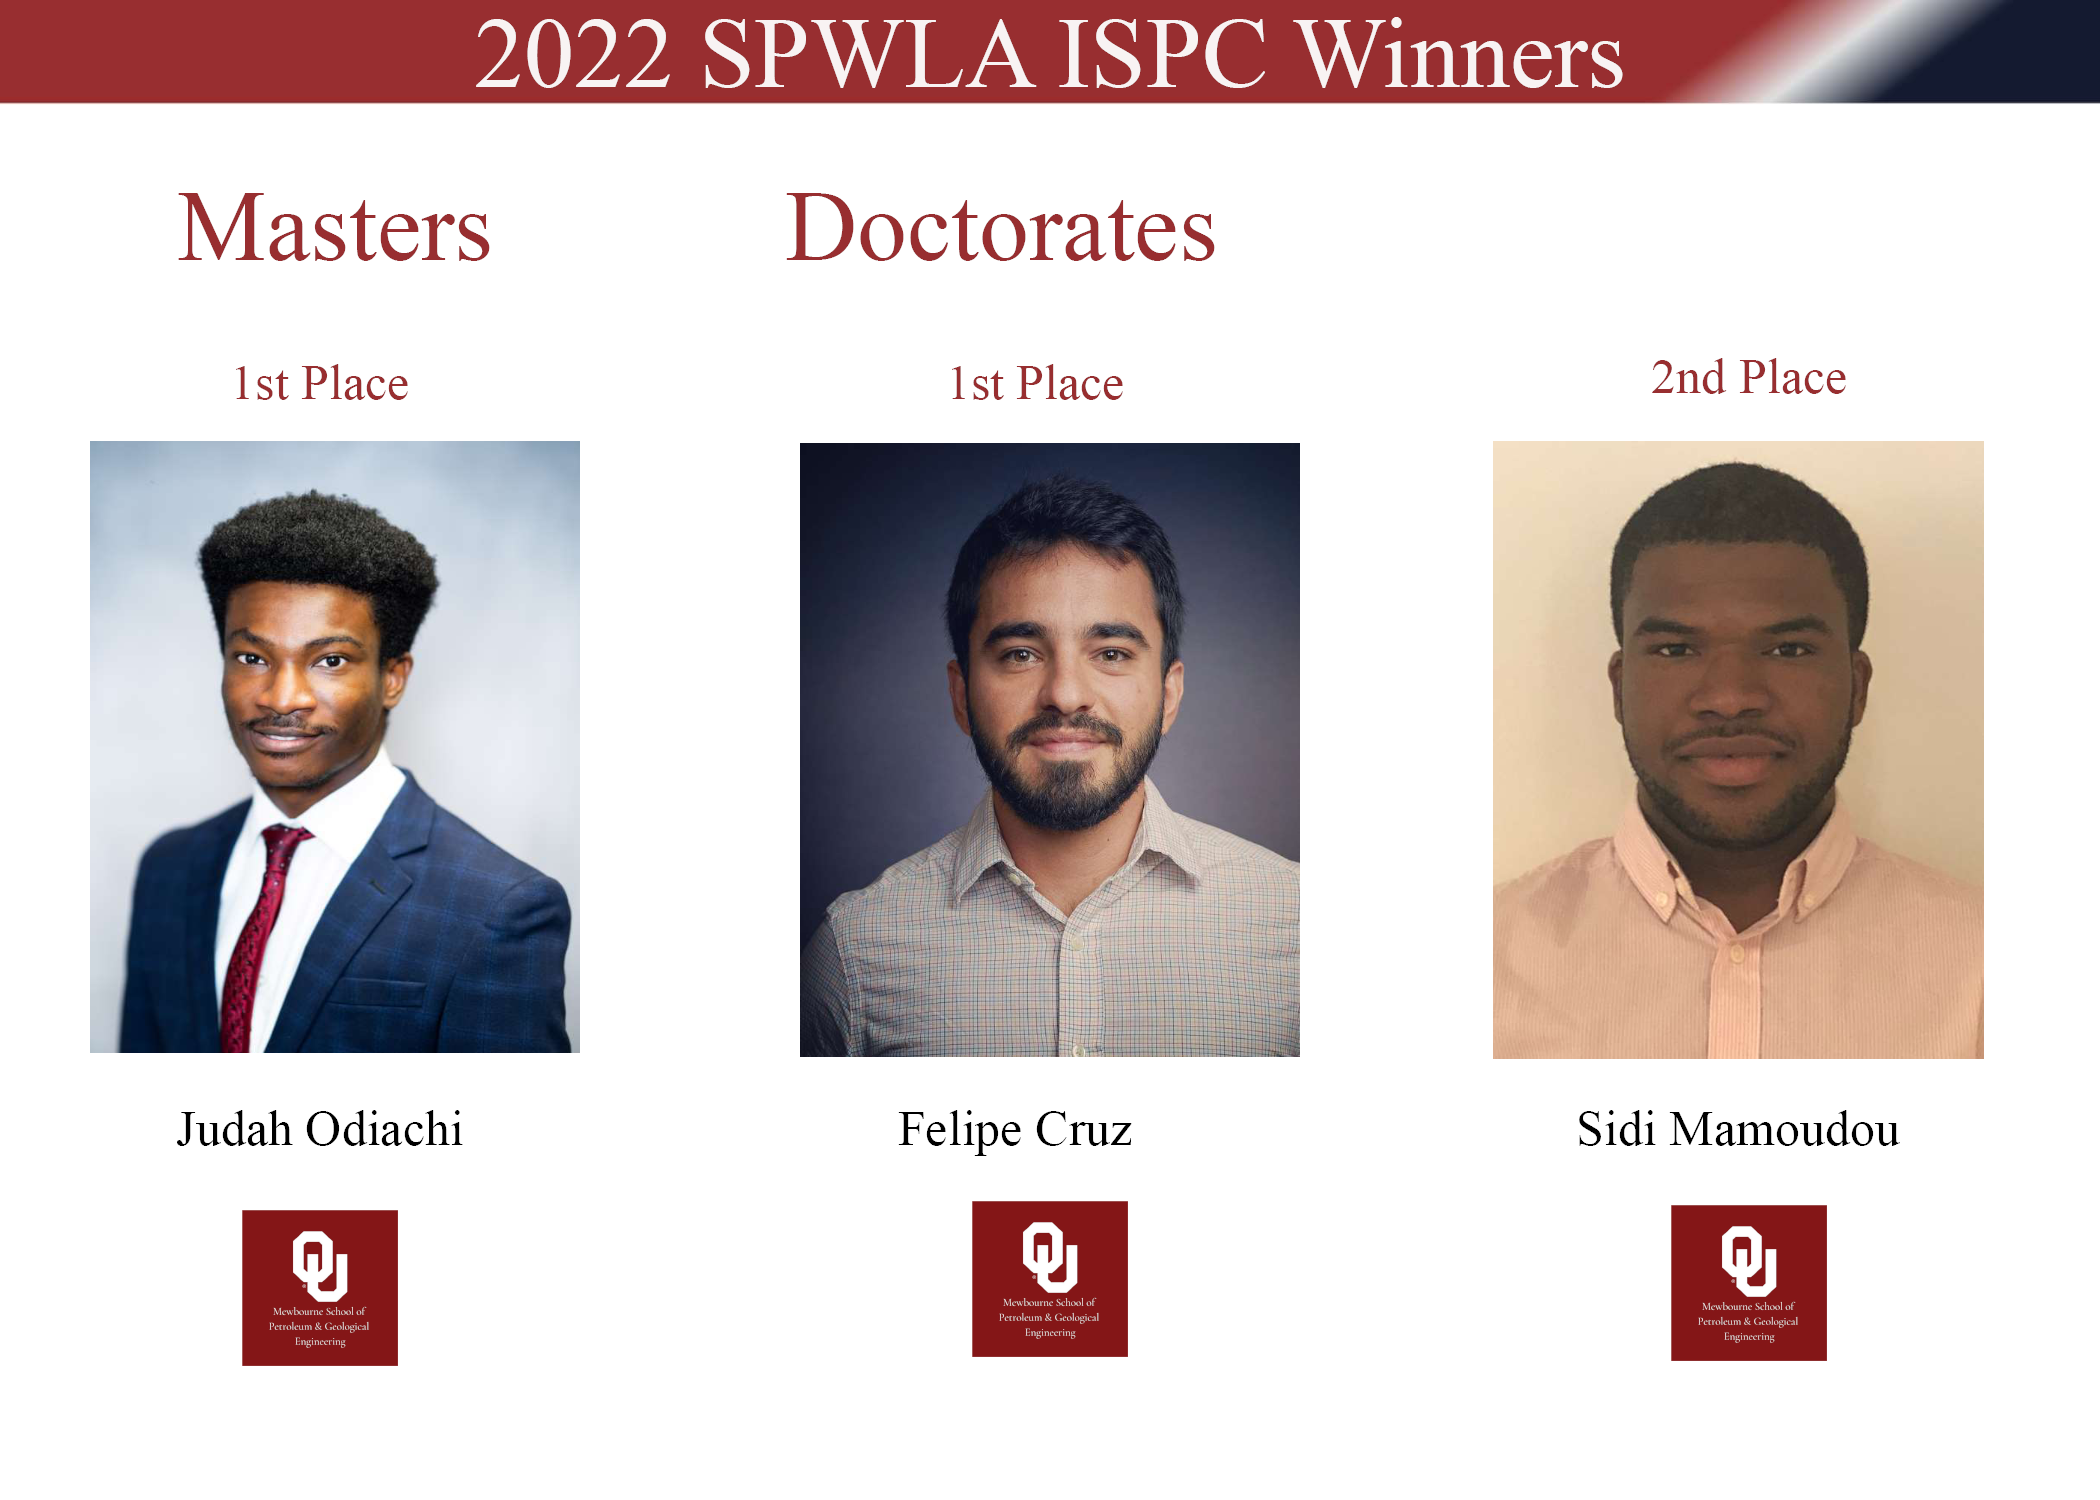 Photo-SPWLA-winners-masters-first-place-judah-odiachi-doctorates-first-place-felipe-cruz-doctorates-second-place-sidi-mamoudou